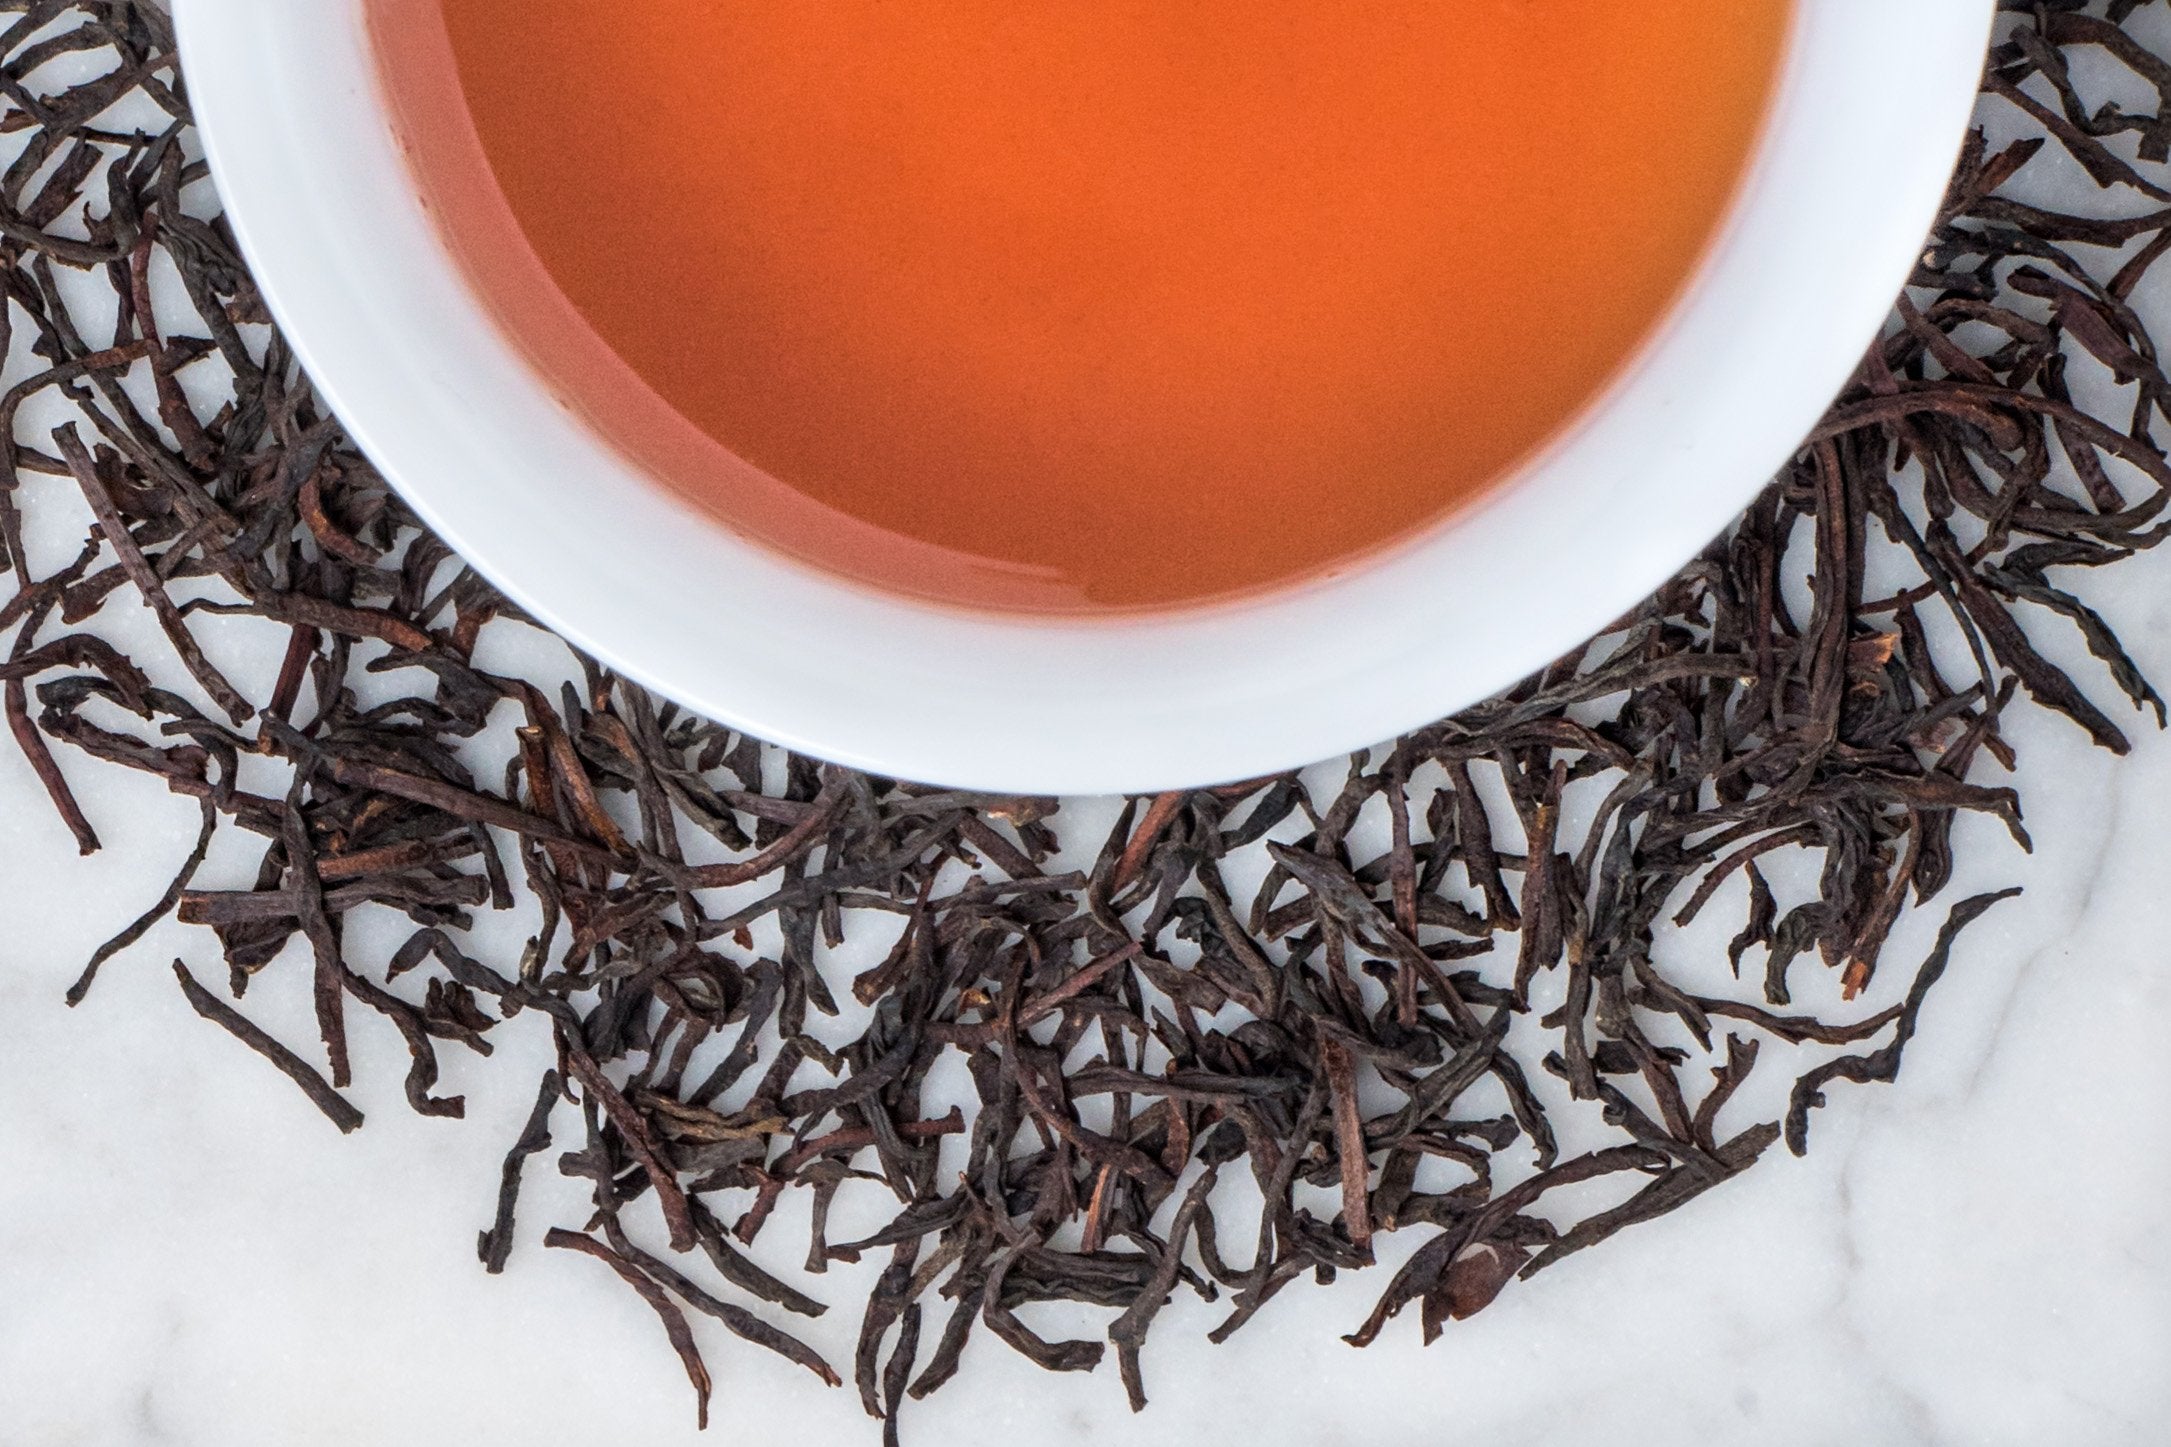 Ceylon Orange Pekoe Whole Beautiful Long Leaves and Cup Of Burnt Orange Tea Liquor